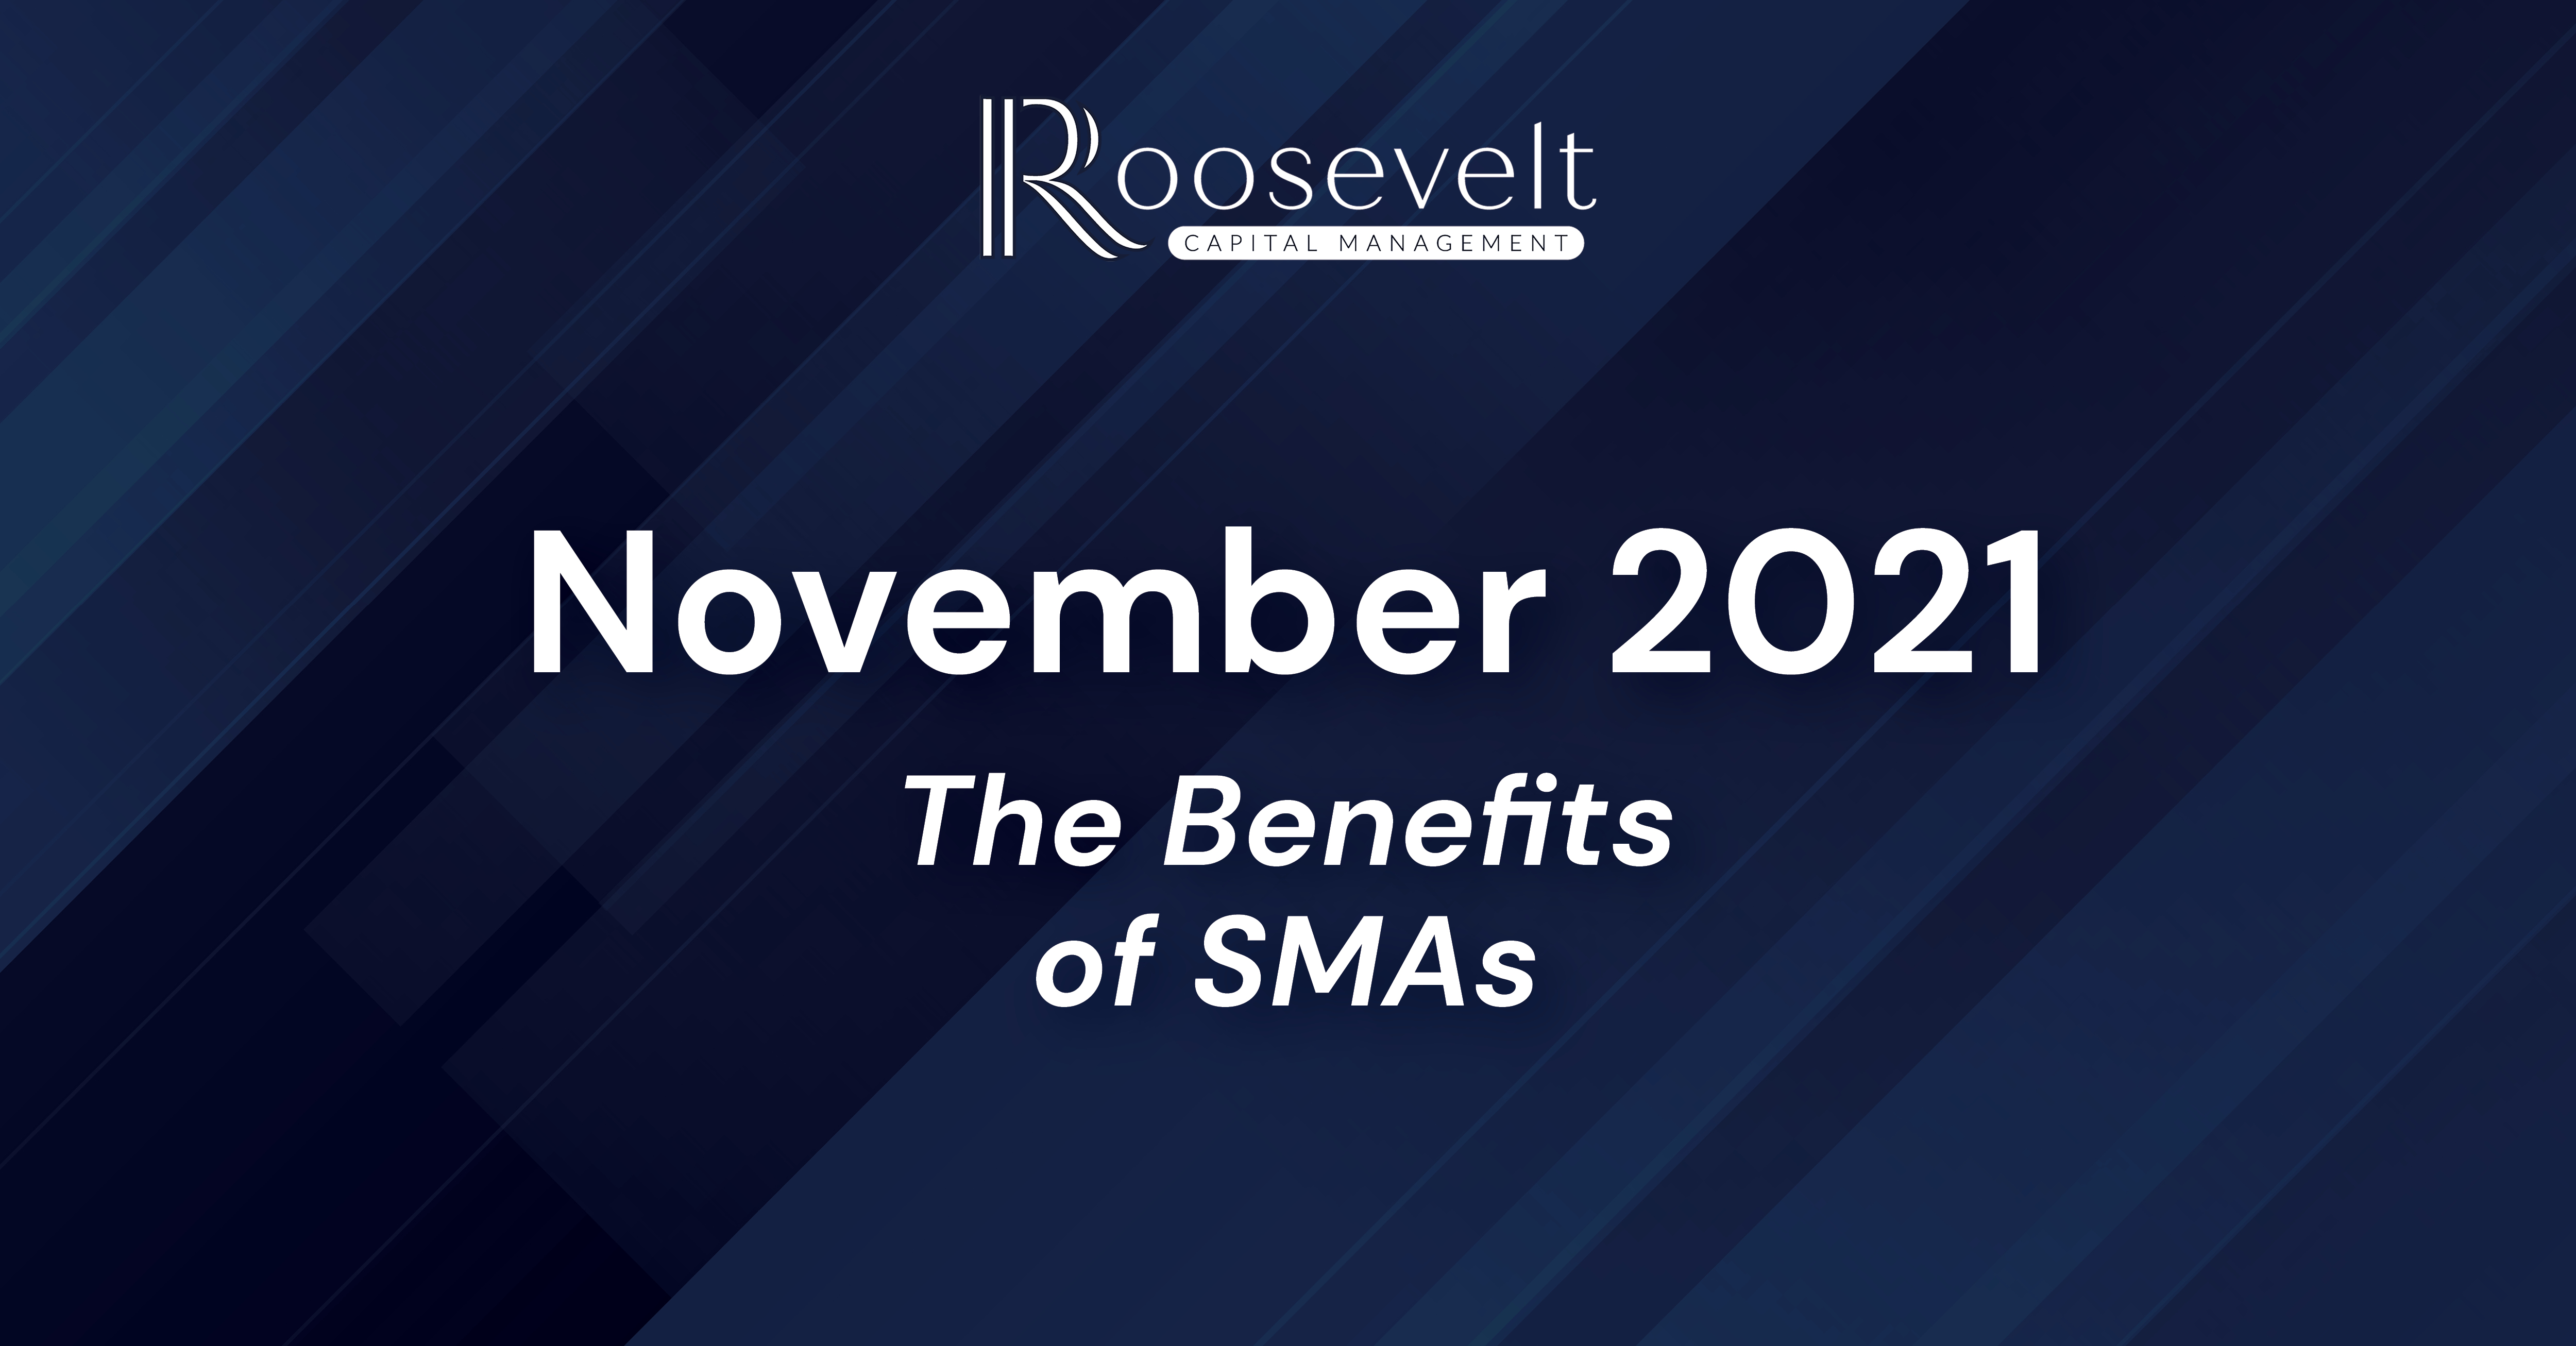 November 2021 - The Benefits of SMAs